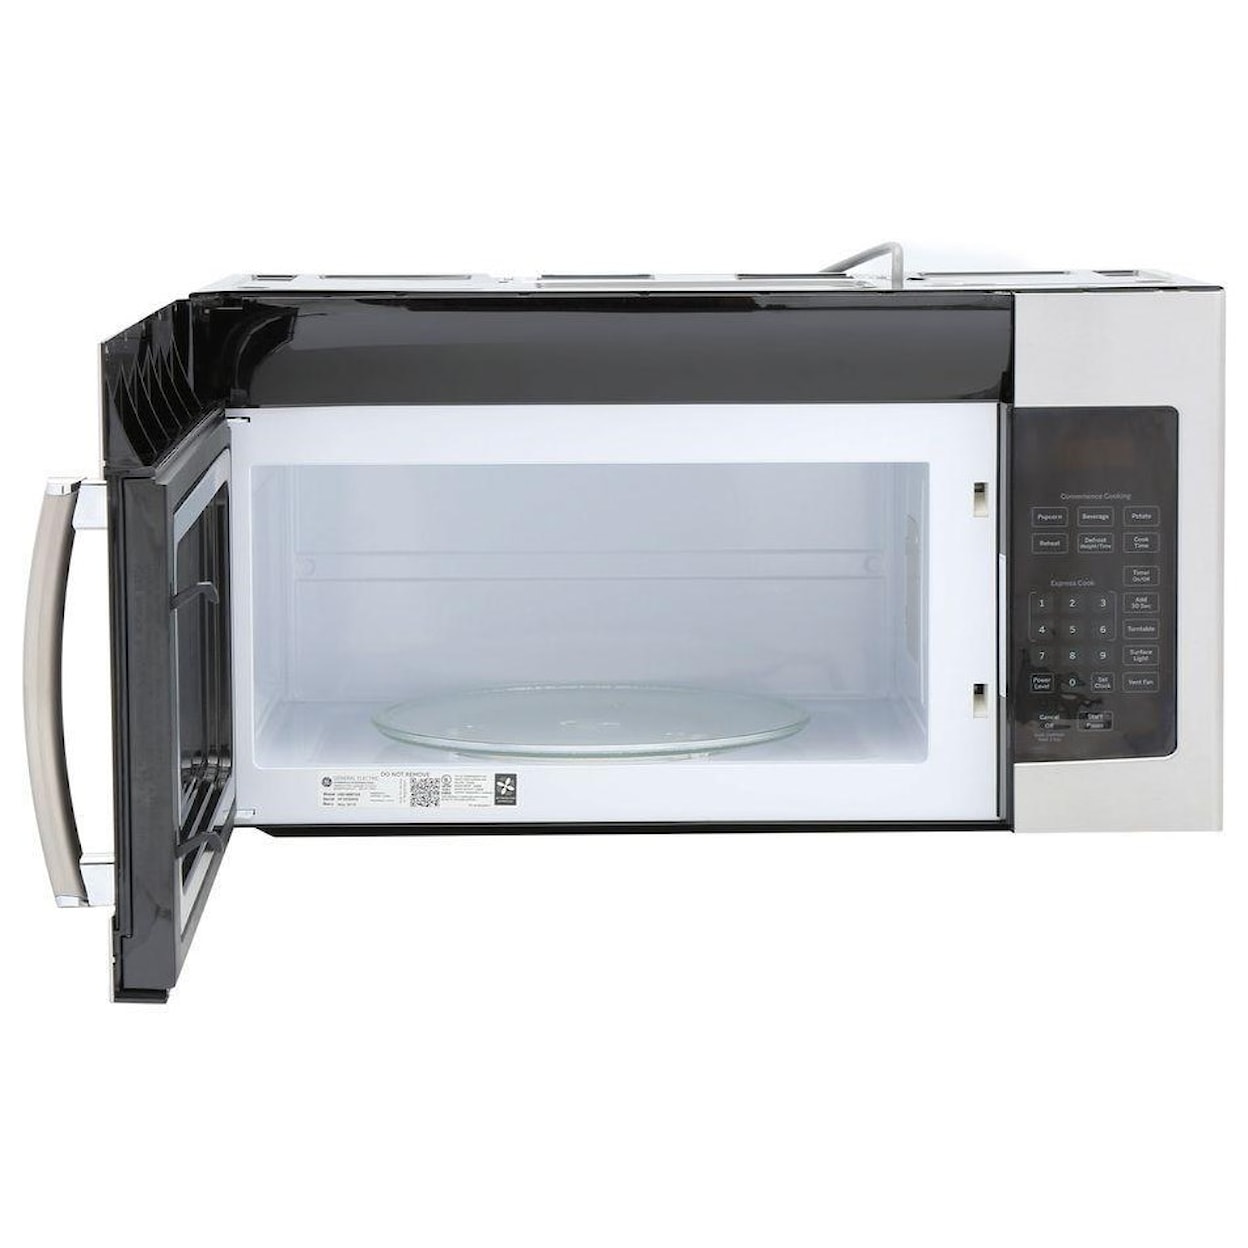 GE Appliances GE Microwaves 1.6 CF STAINLESS MICROWAVE